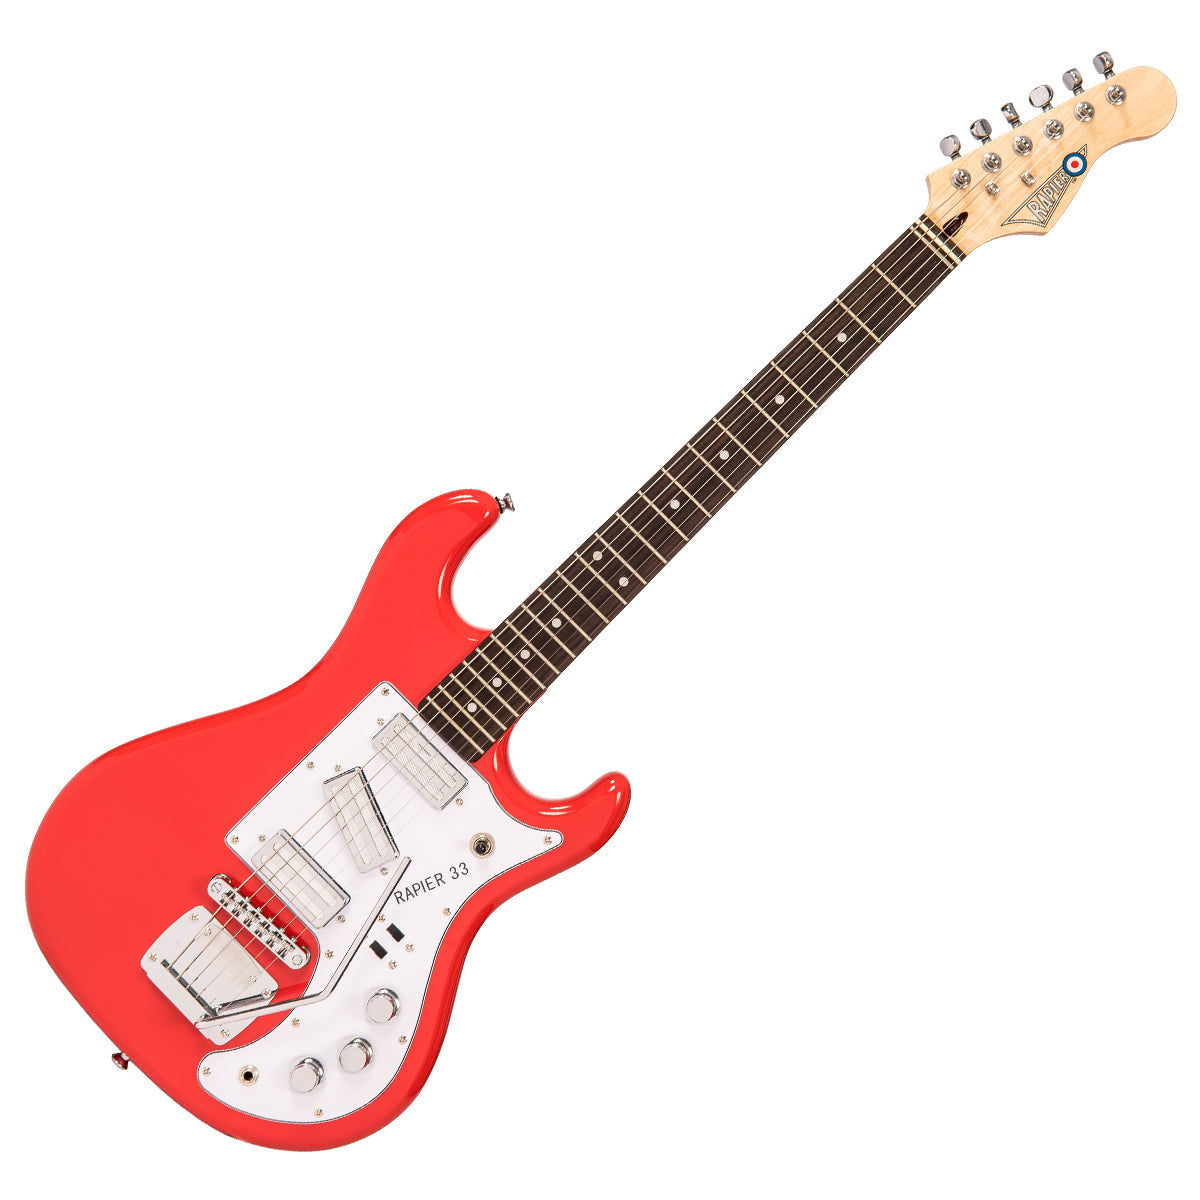 Rapier 33 Electric Guitar ~ Fiesta Red, Electric Guitar for sale at Richards Guitars.